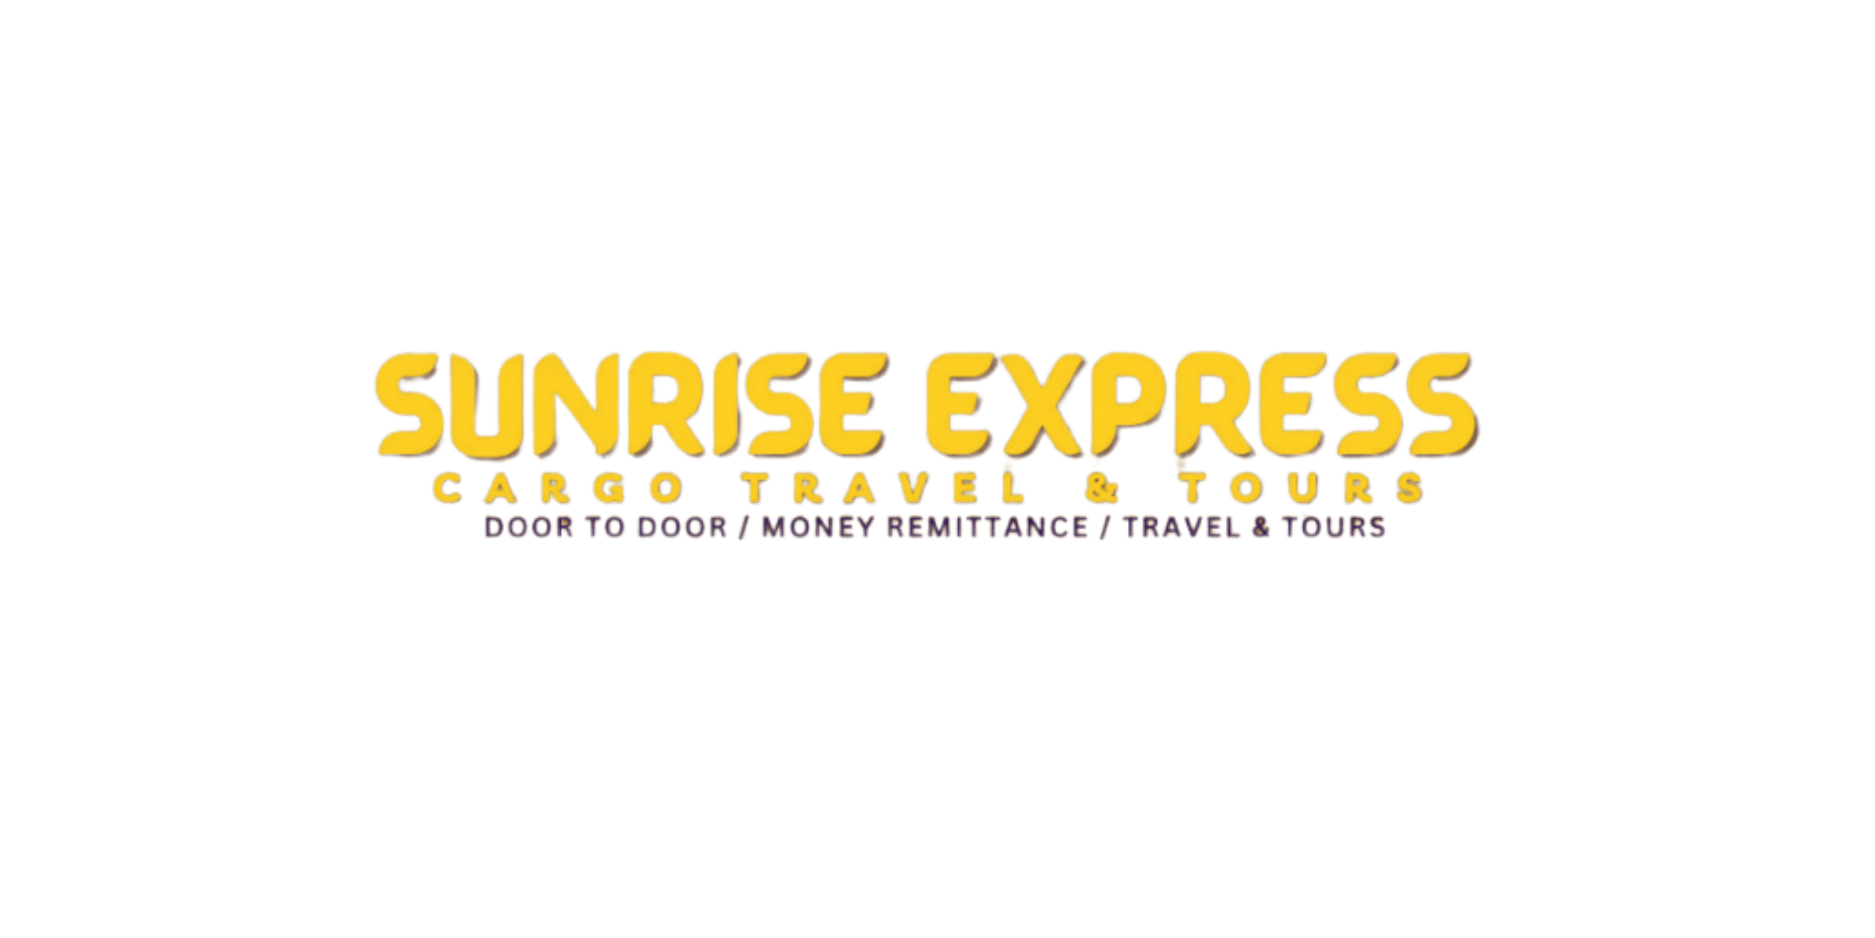 cargo tours express 21 s.l